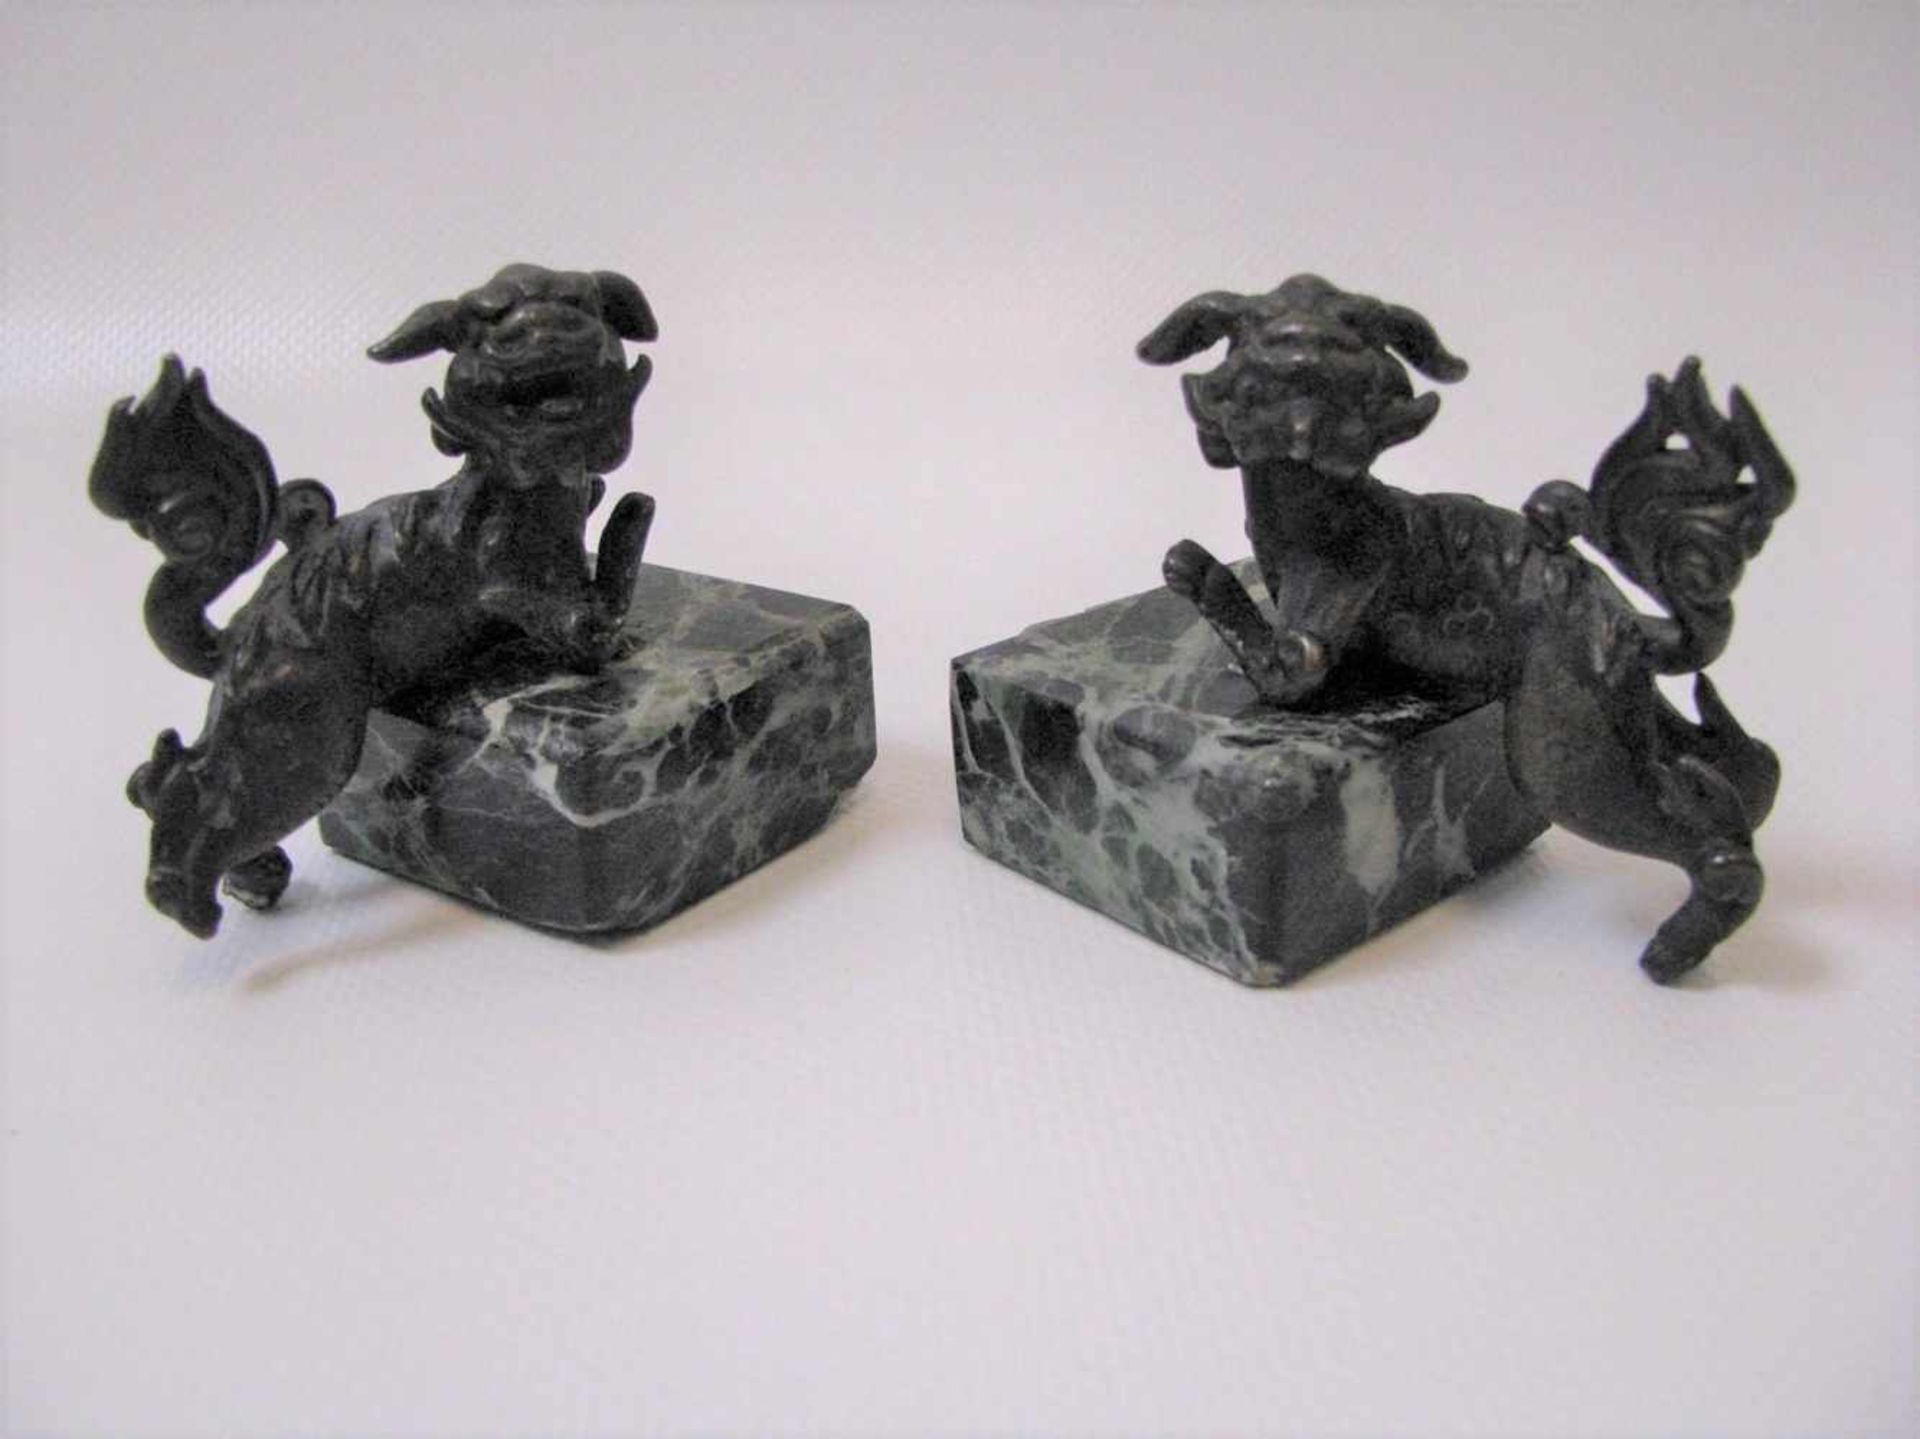 2 Löwen, China, antik, Bronze, 5 x 5,5 x 2,5 cm.- - -19.00 % buyer's premium on the hammer price19.